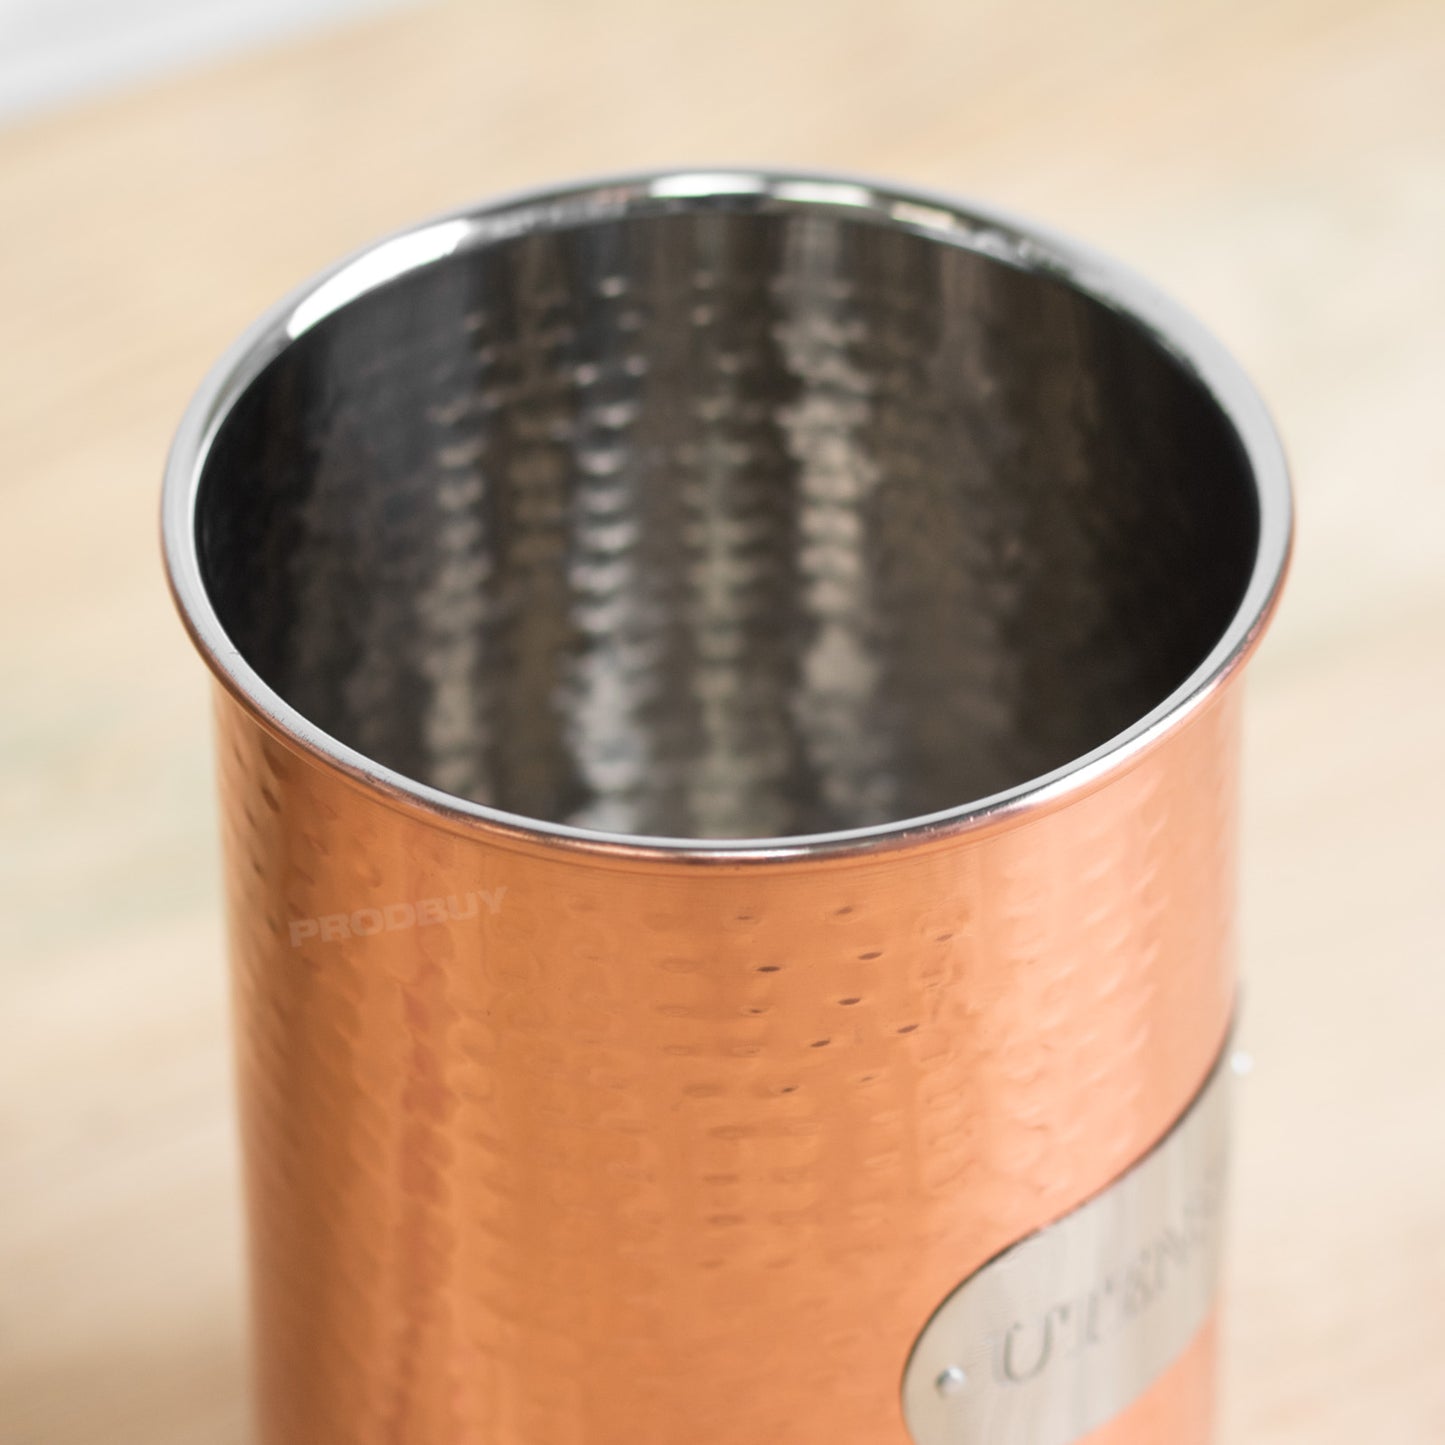 Hammered Copper Large Utensil Holder Pot